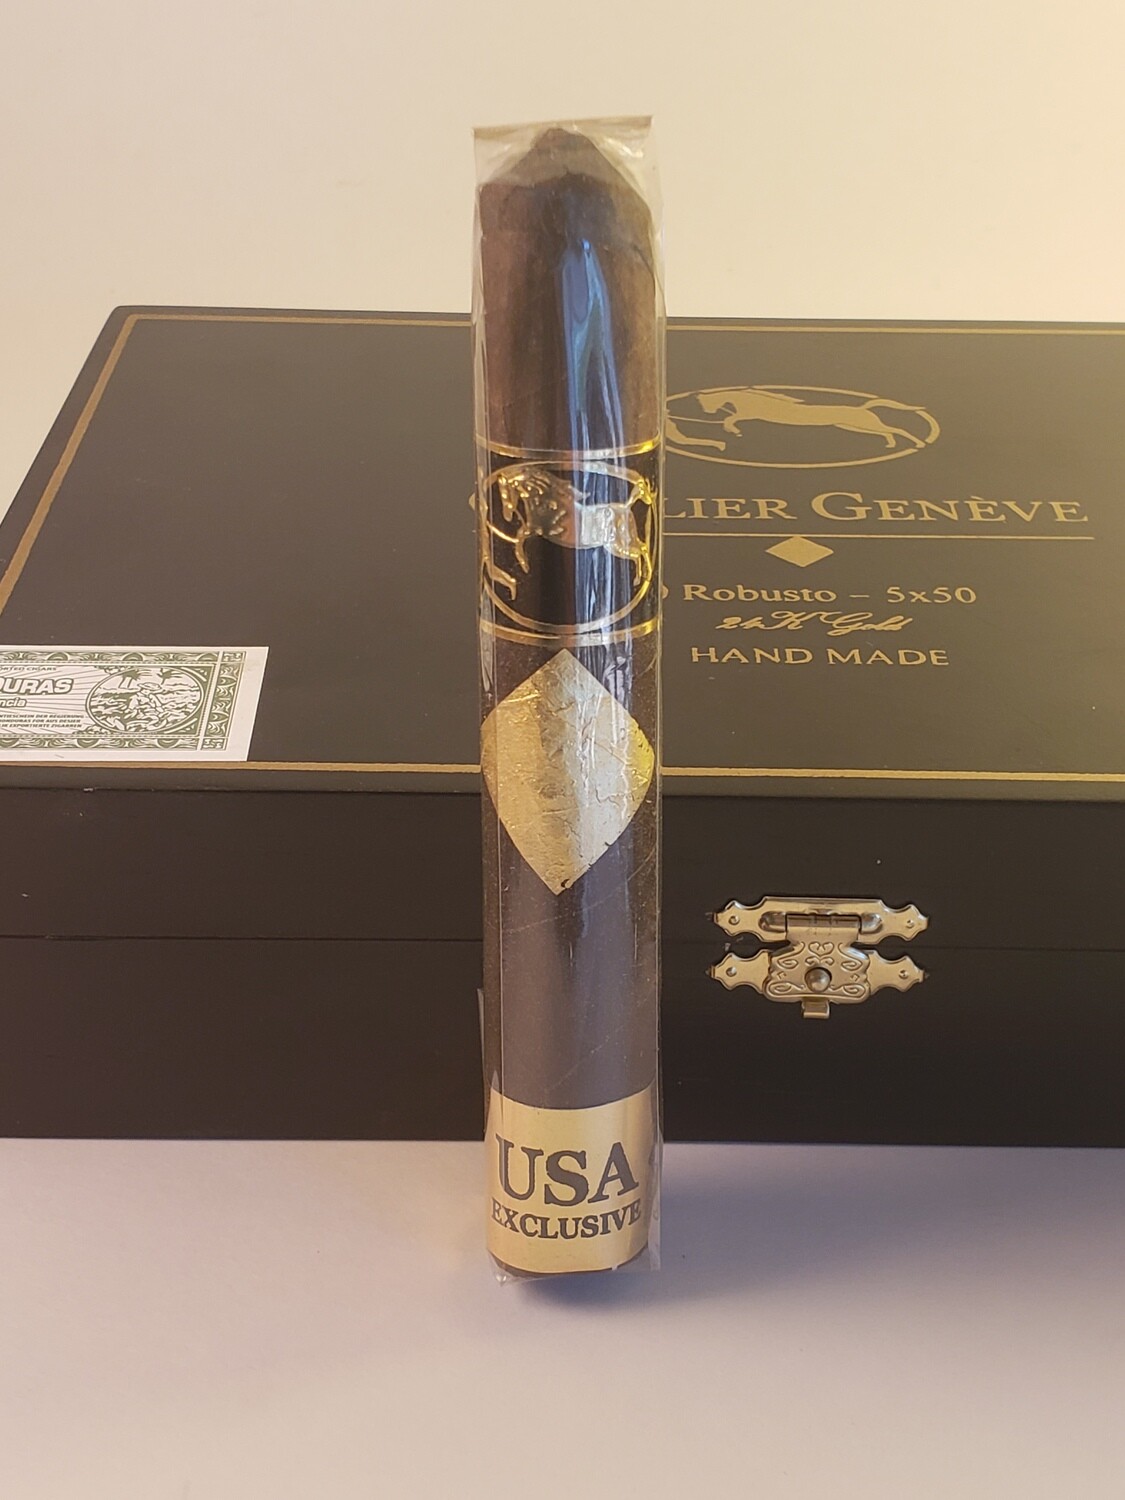 Cavalier Geneve Black Series USA Robusto 5 x 50 Single Cigar